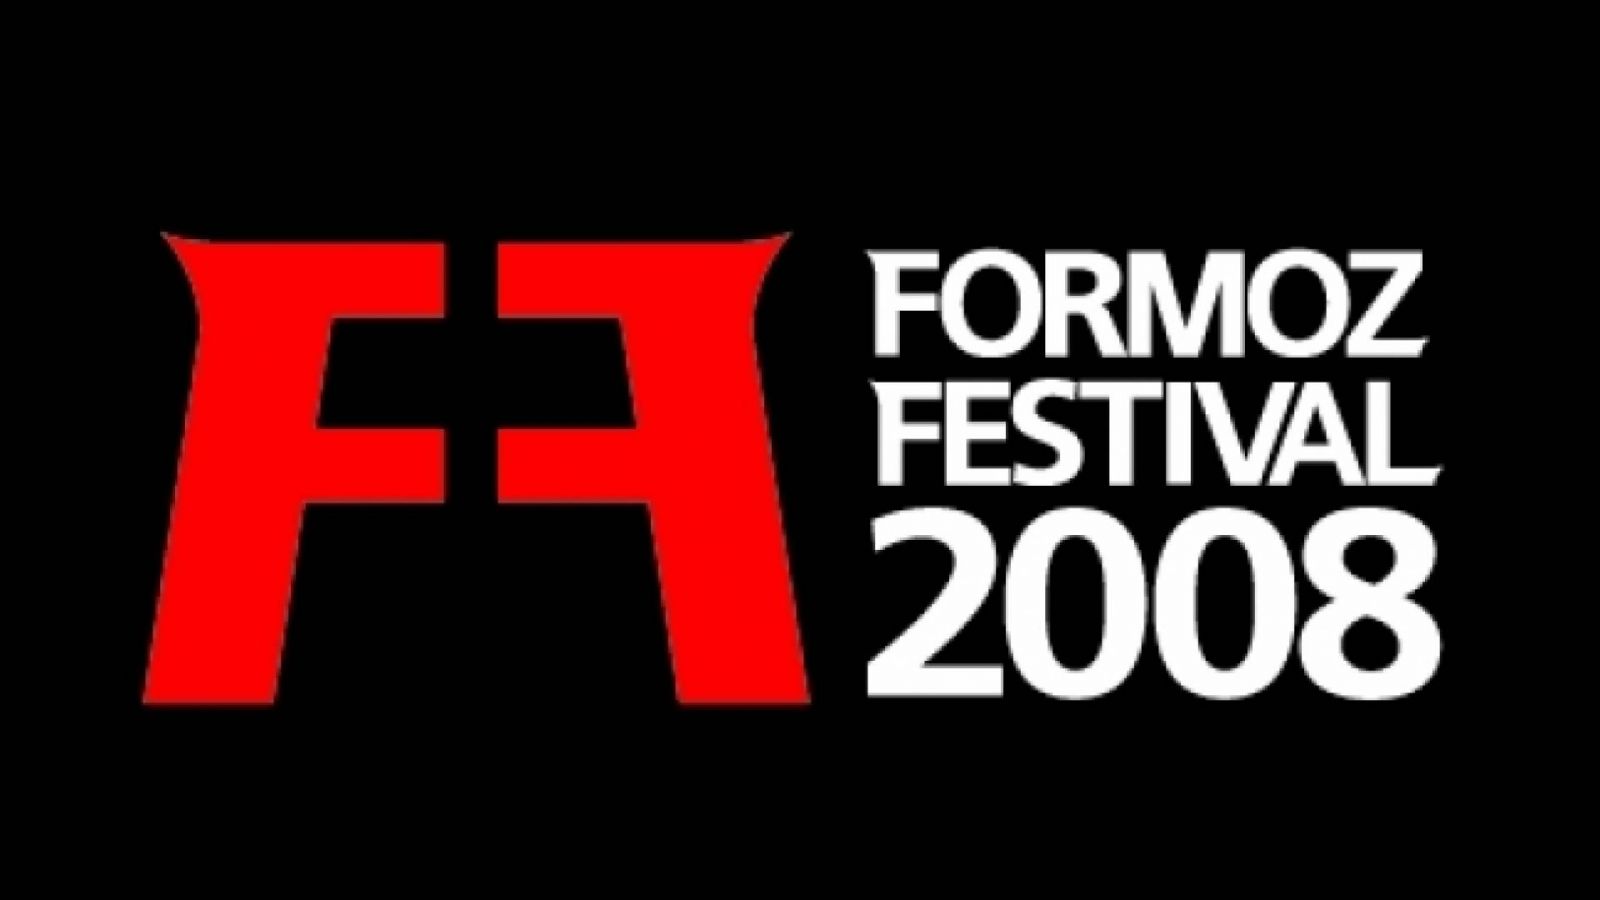 FORMOZ Festival - Part 1 © Formoz Festival